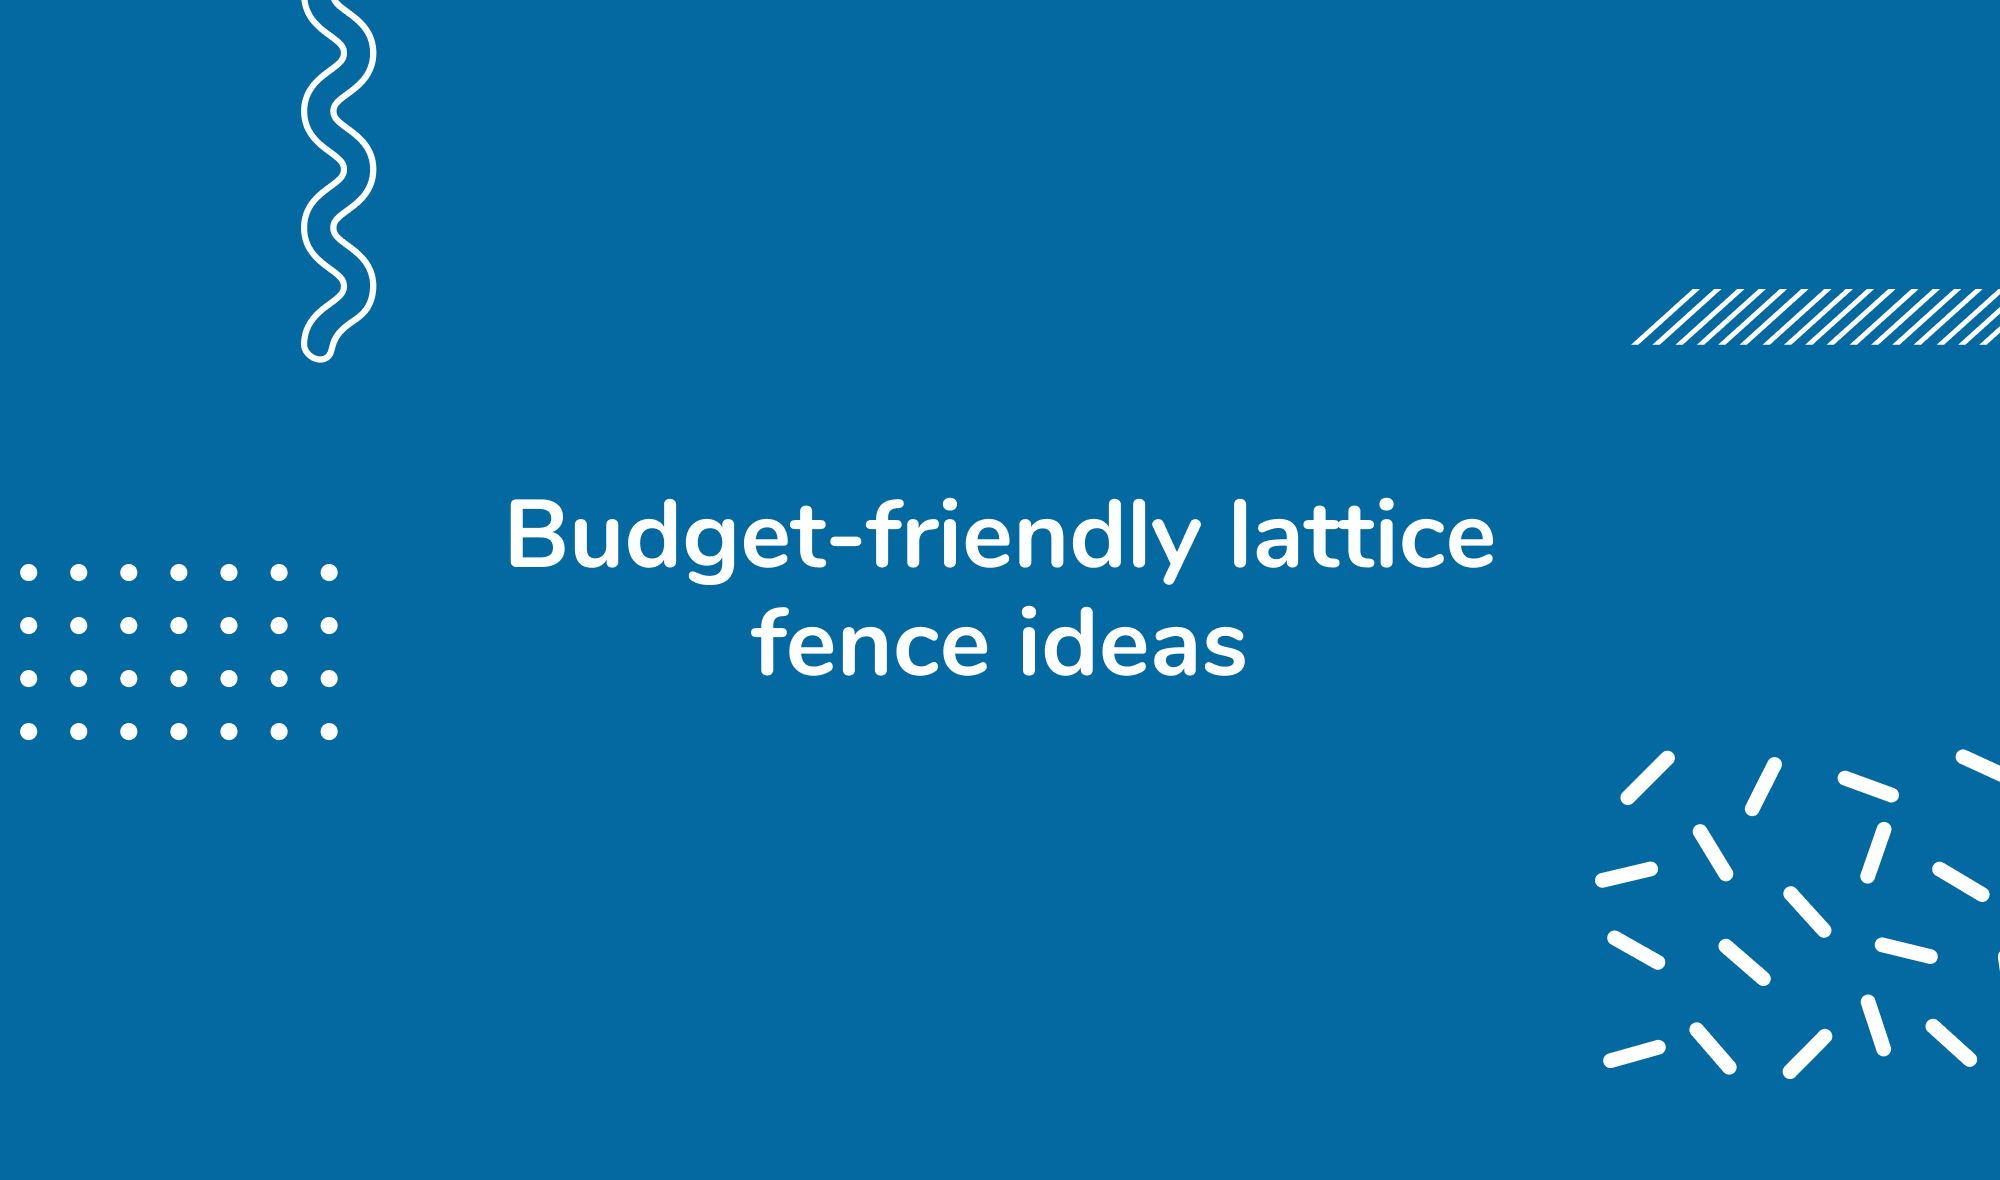 Budget-friendly lattice fence ideas